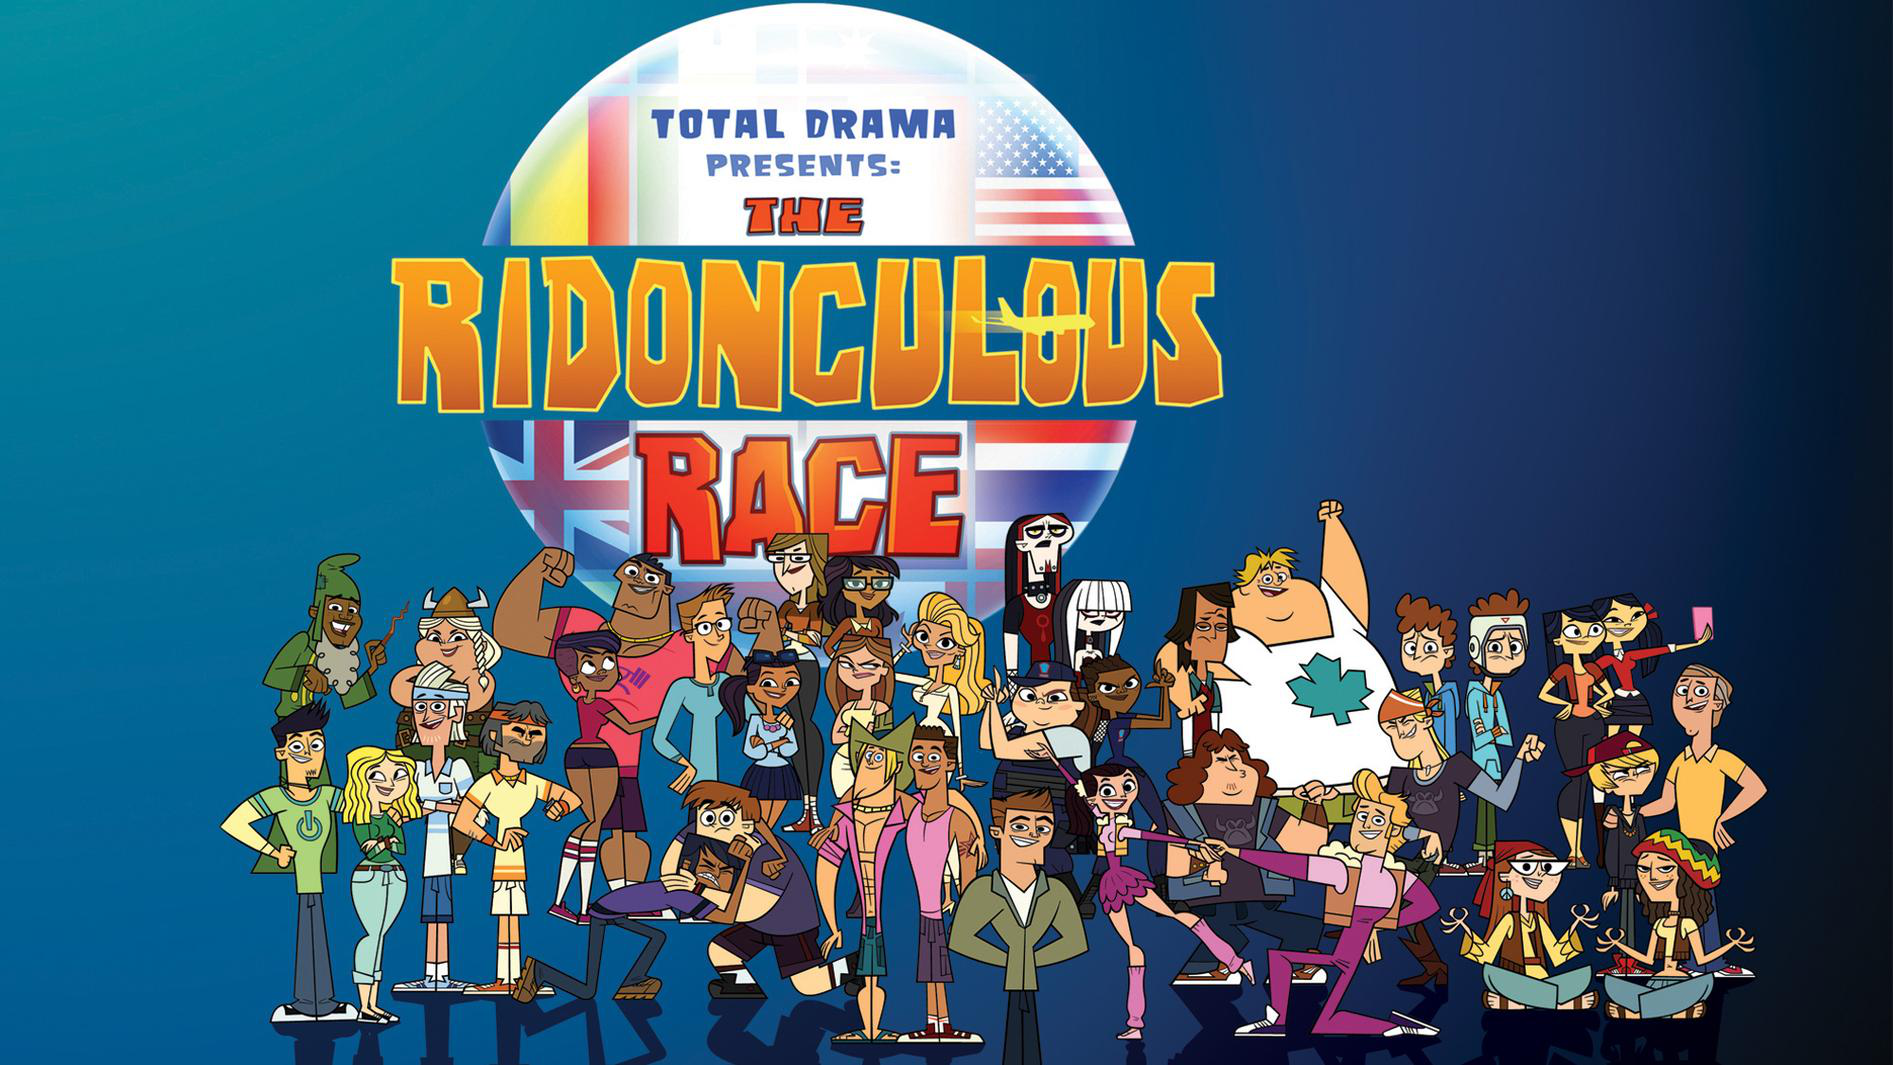 Total Drama Presents the Ridonculous Race: Season 1, Episode 6 - Rotten  Tomatoes